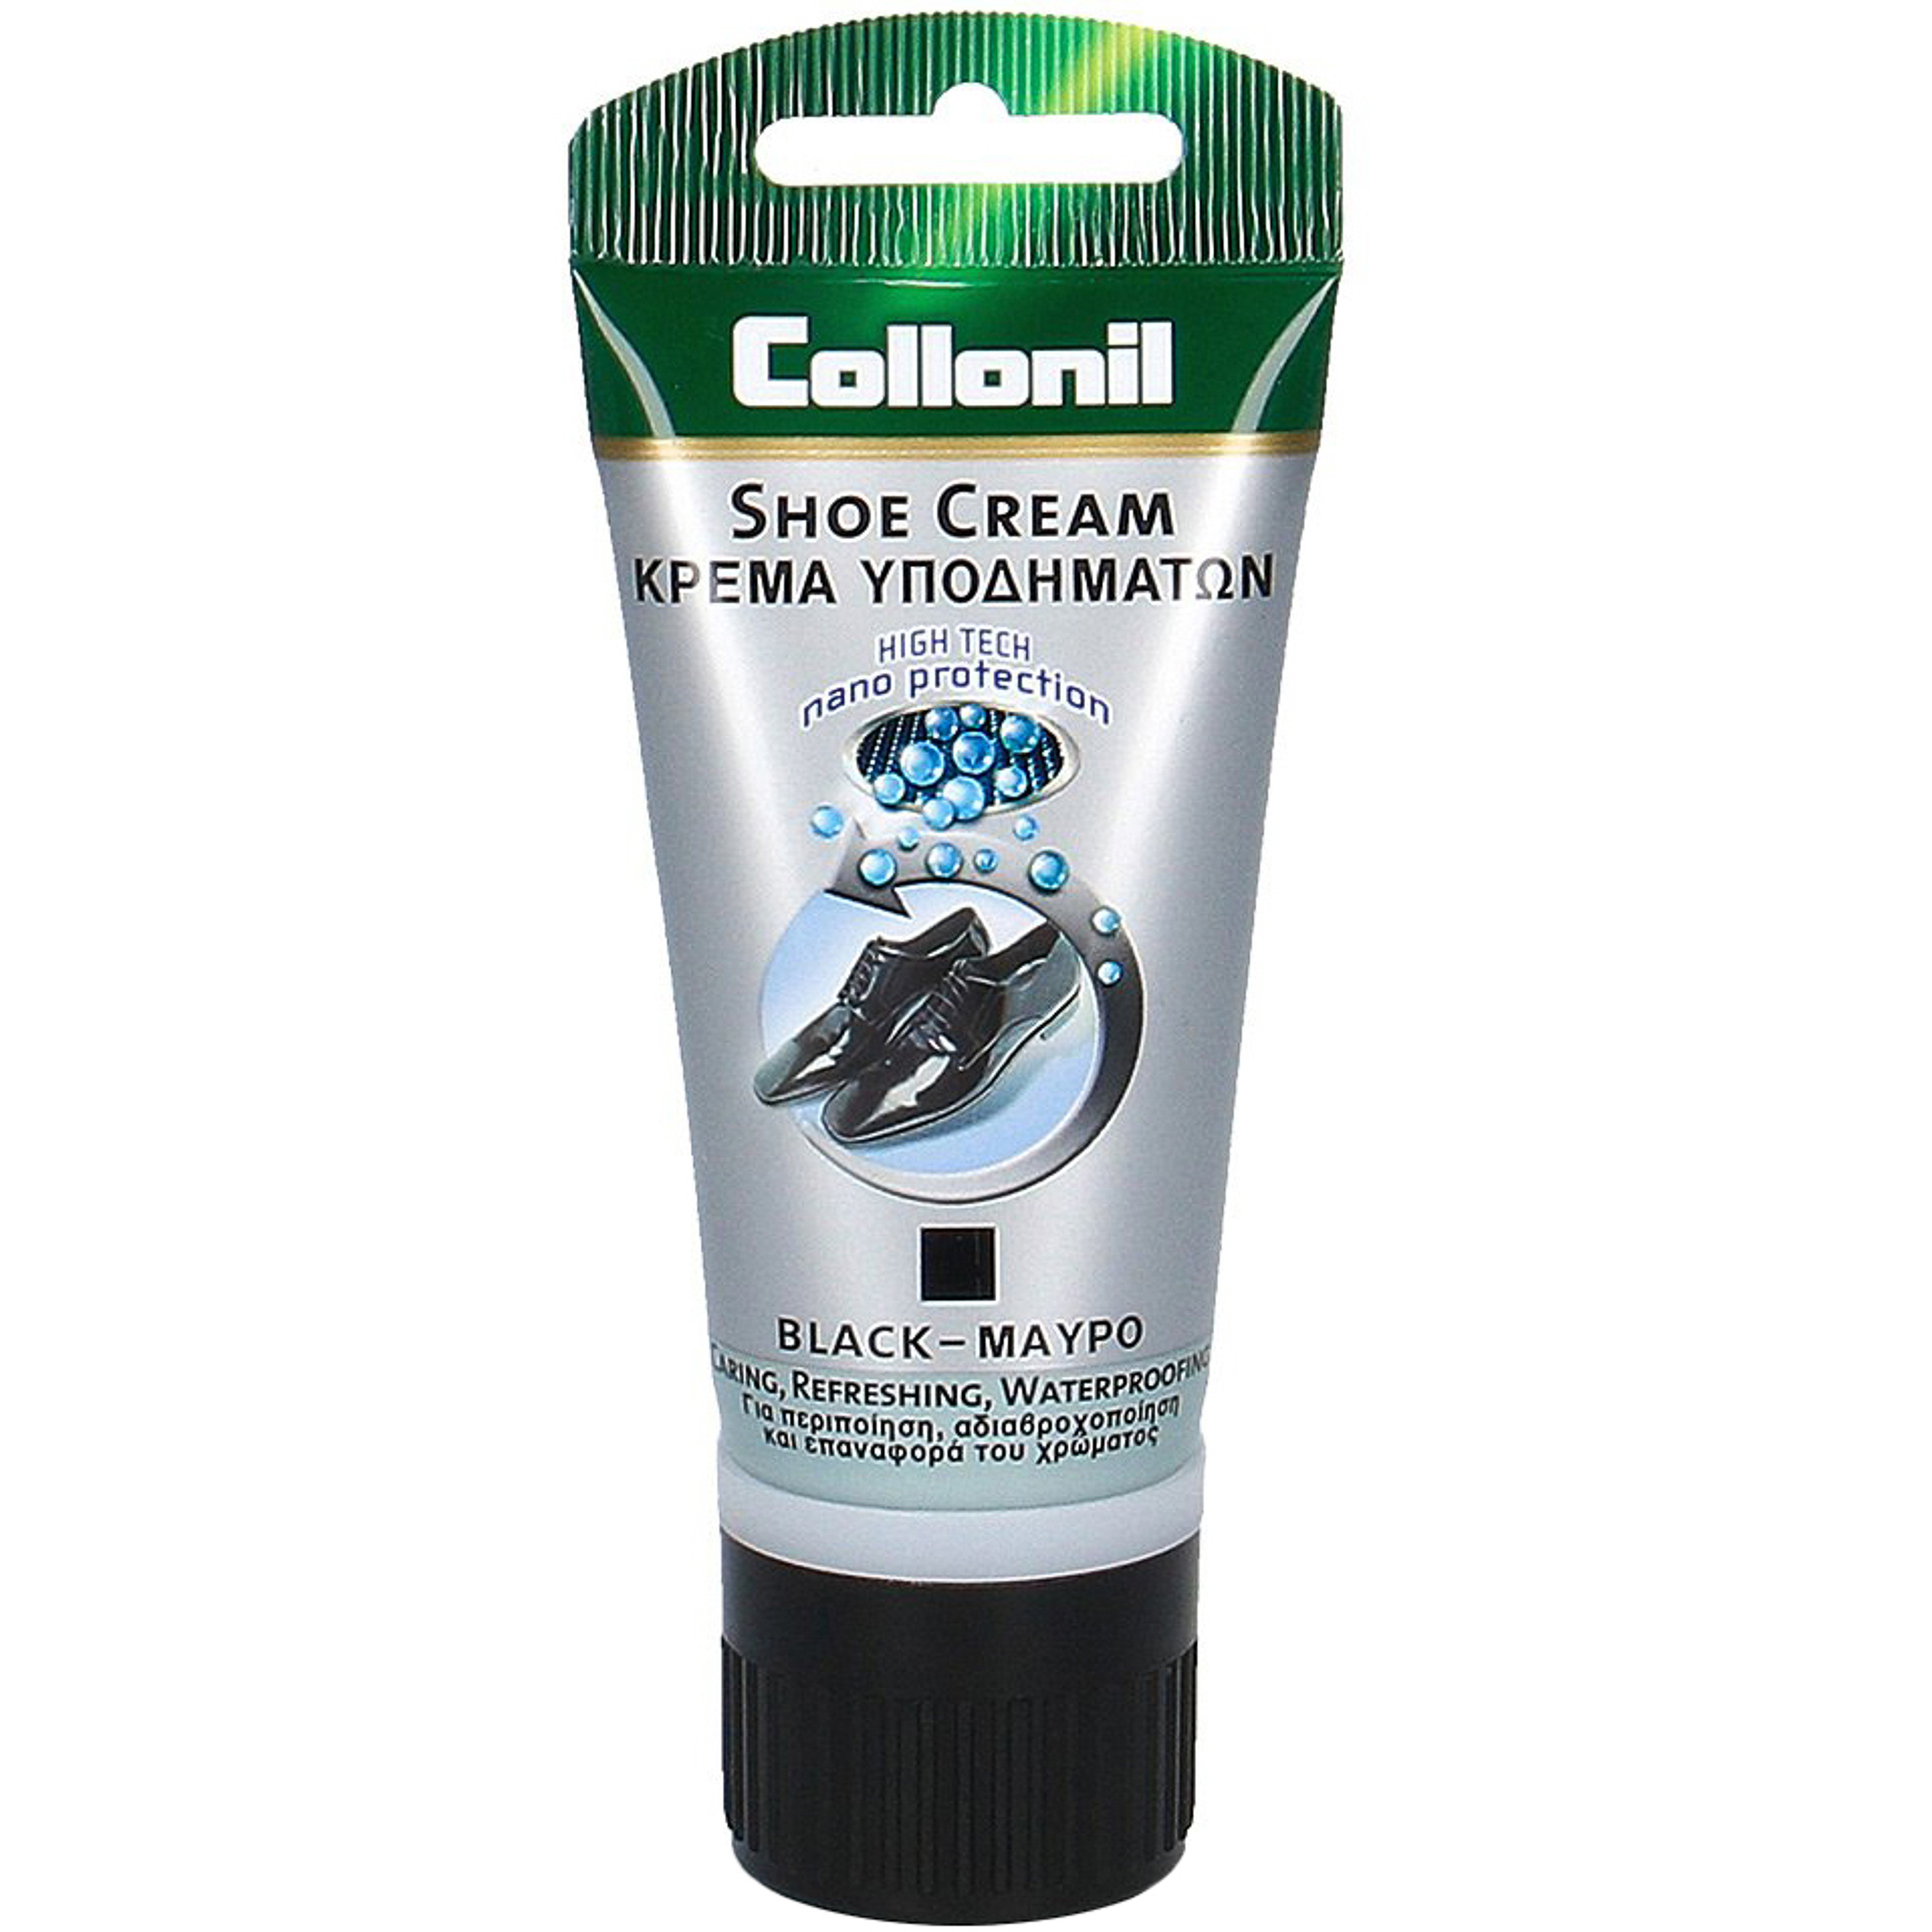 Крем Collonil Nano Protection Shoe Cream водоотталкивающий черный 50 мл крем collonil nano protection shoe cream водоотталкивающий бес ный 50 мл